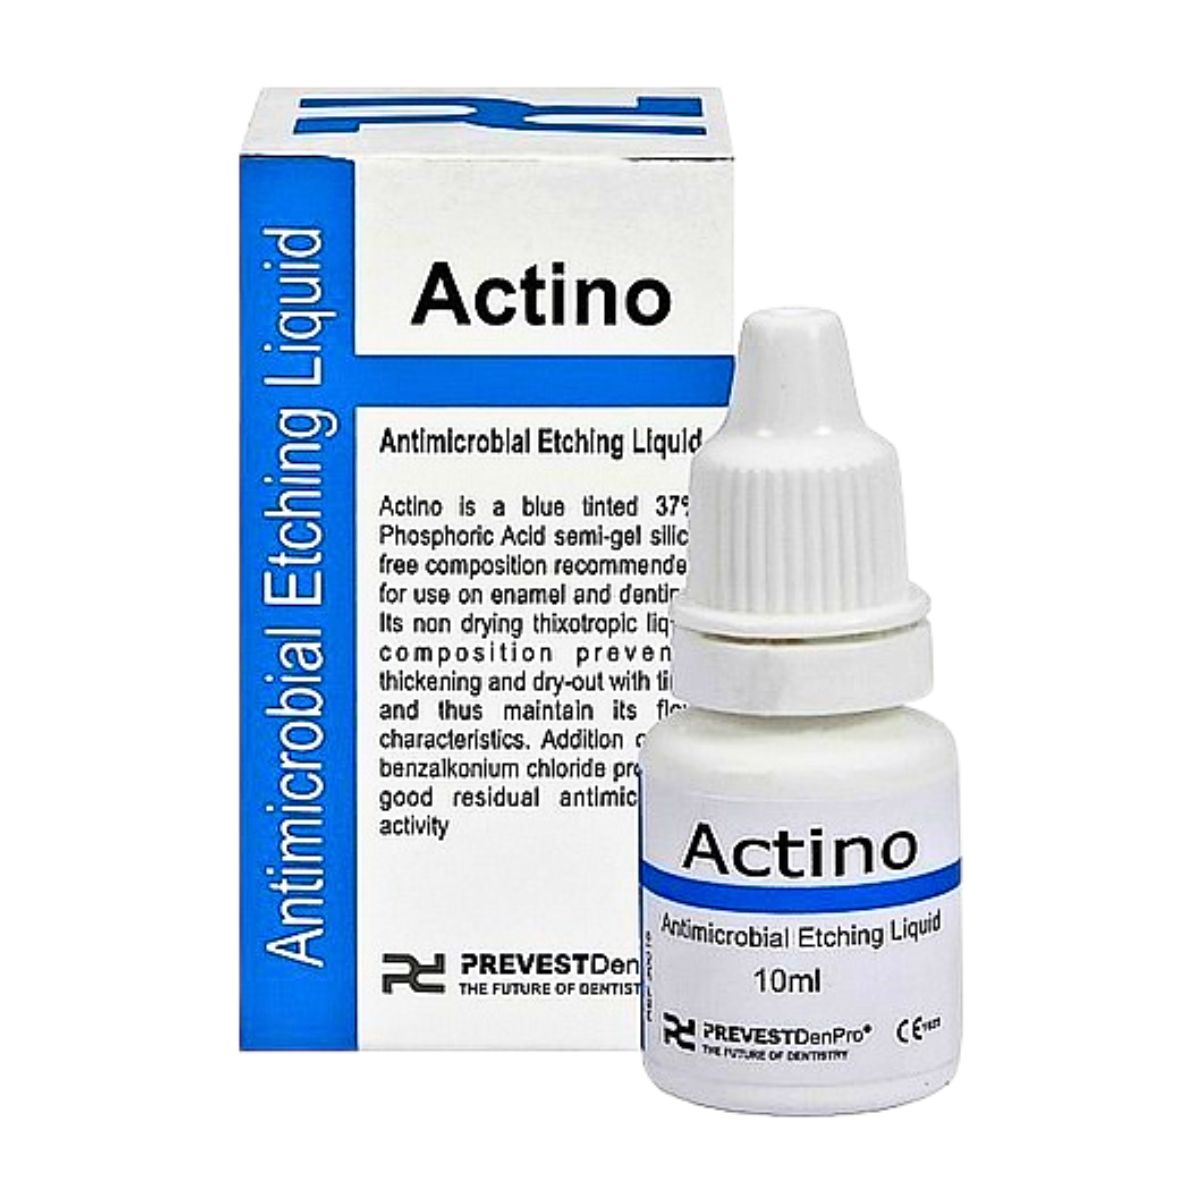 Prevest DenPro Actino Antimicrobial Etching Liquid 10ml